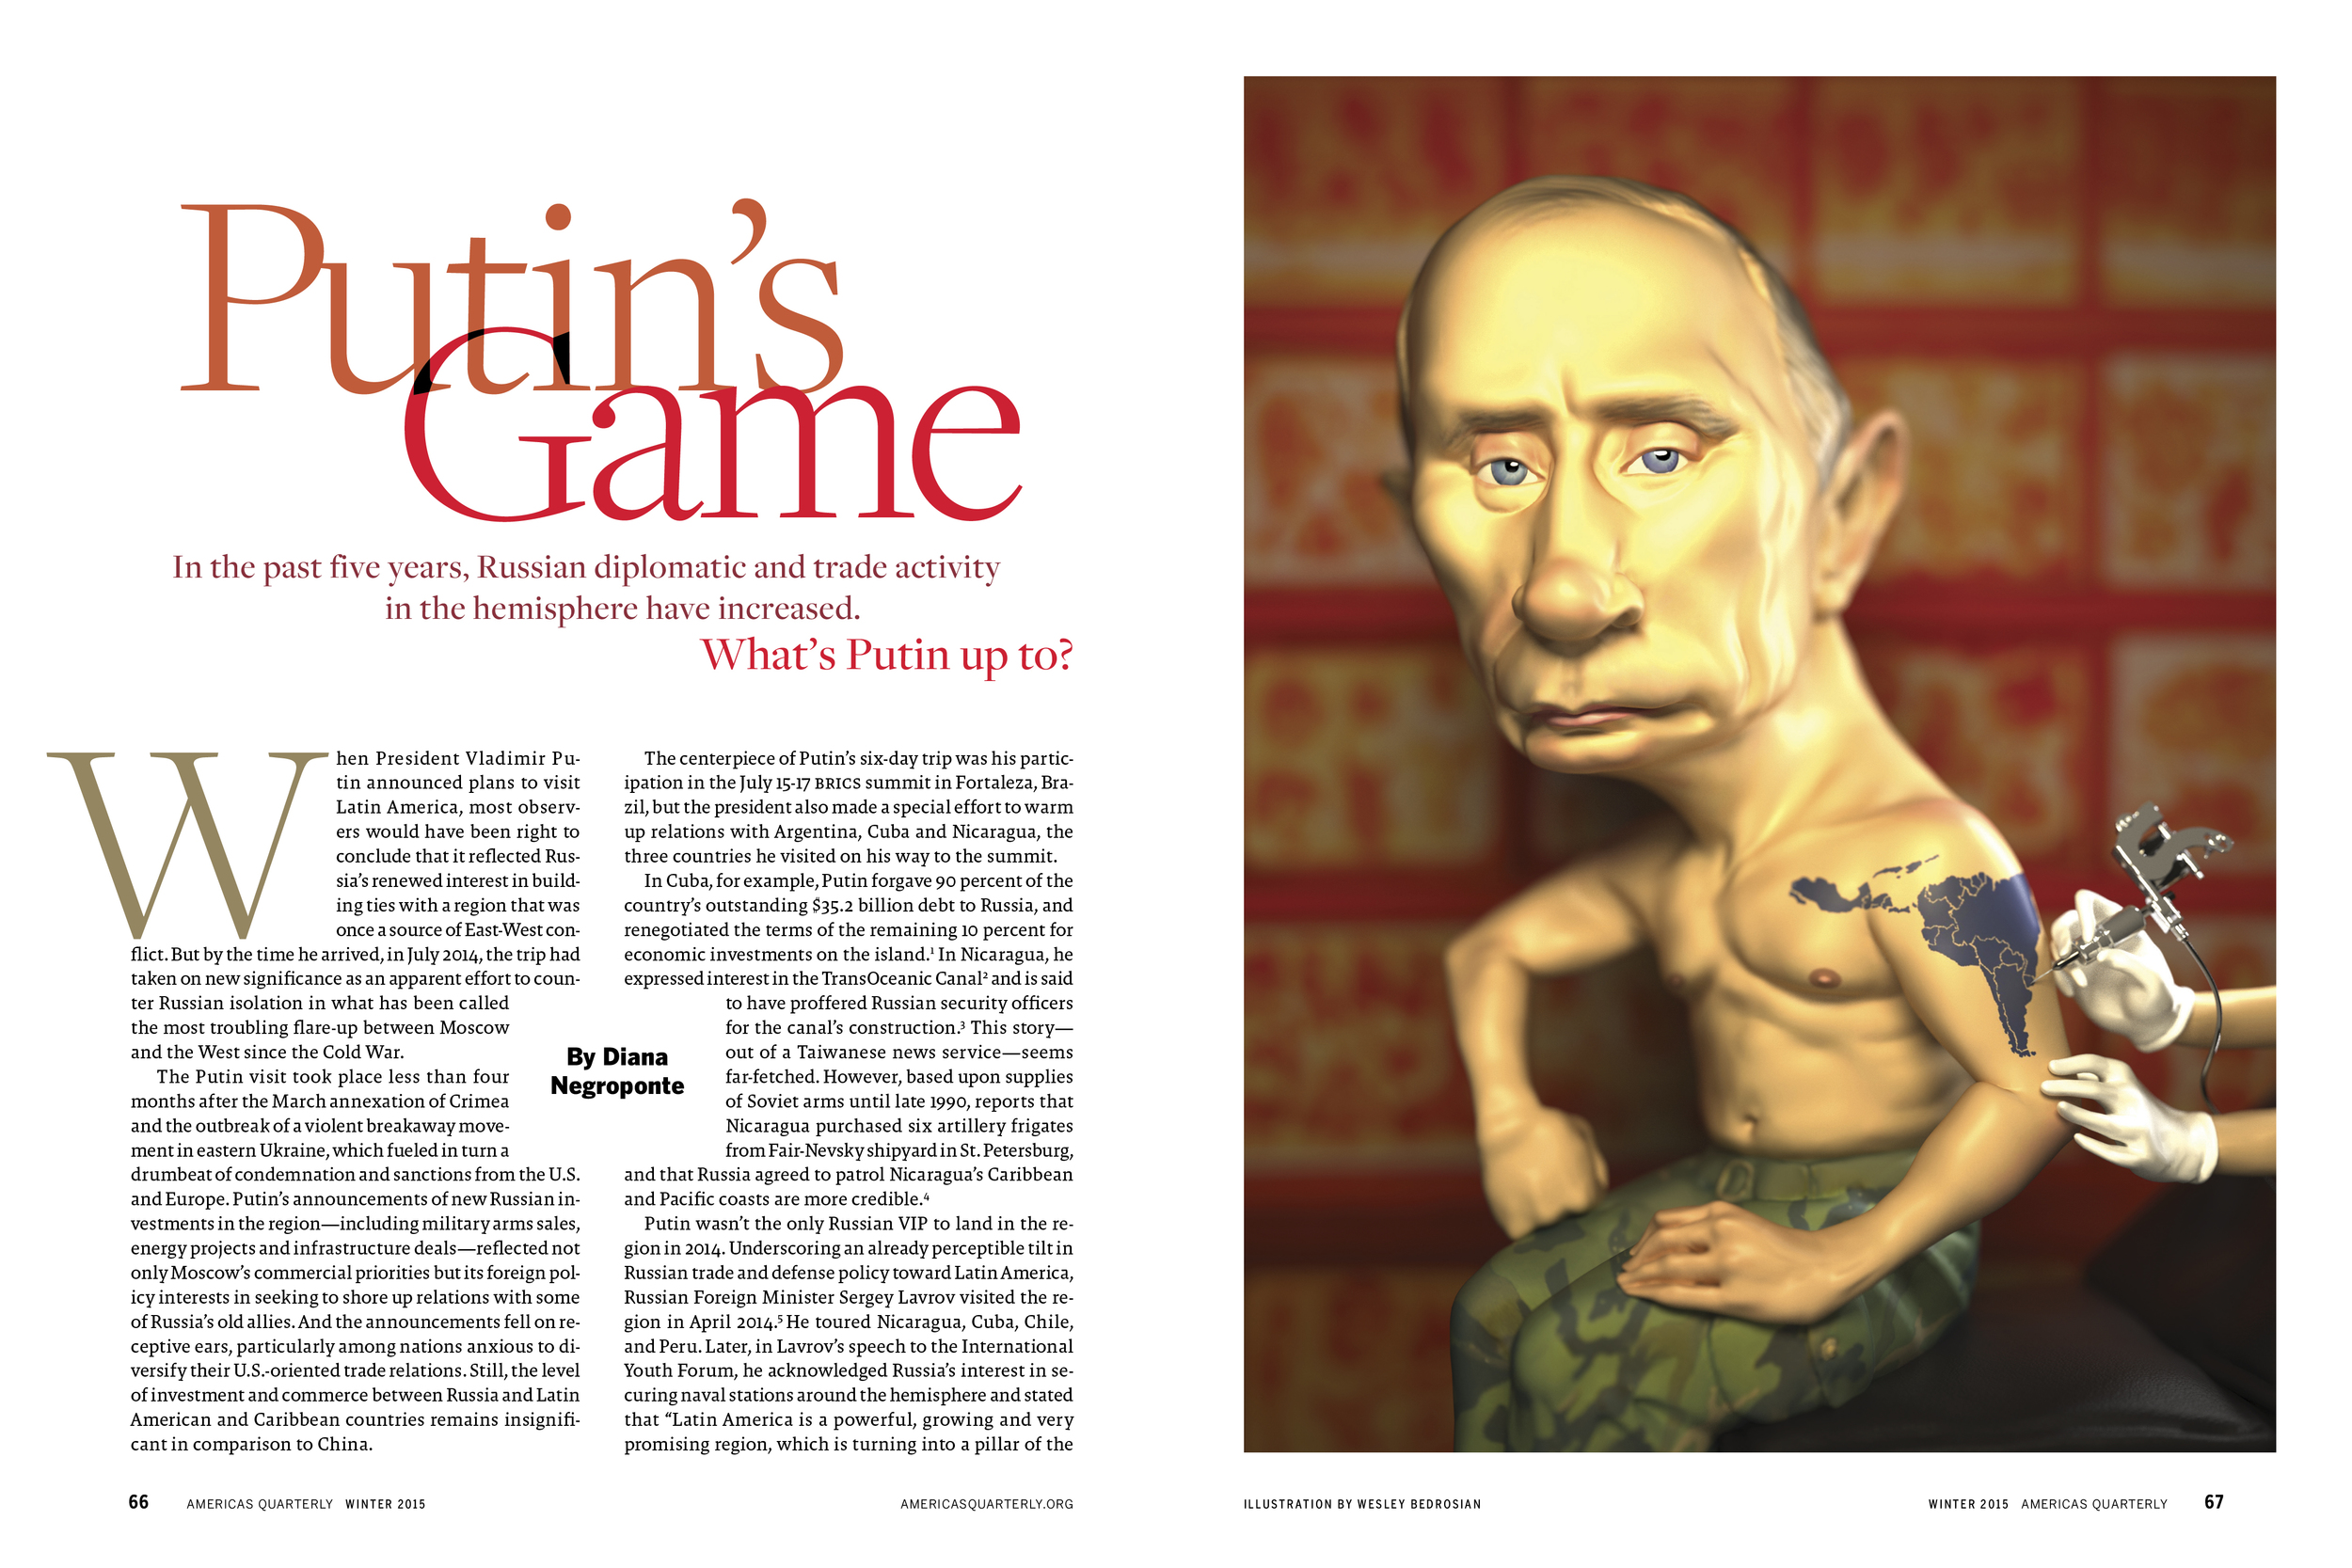 Putin's Game